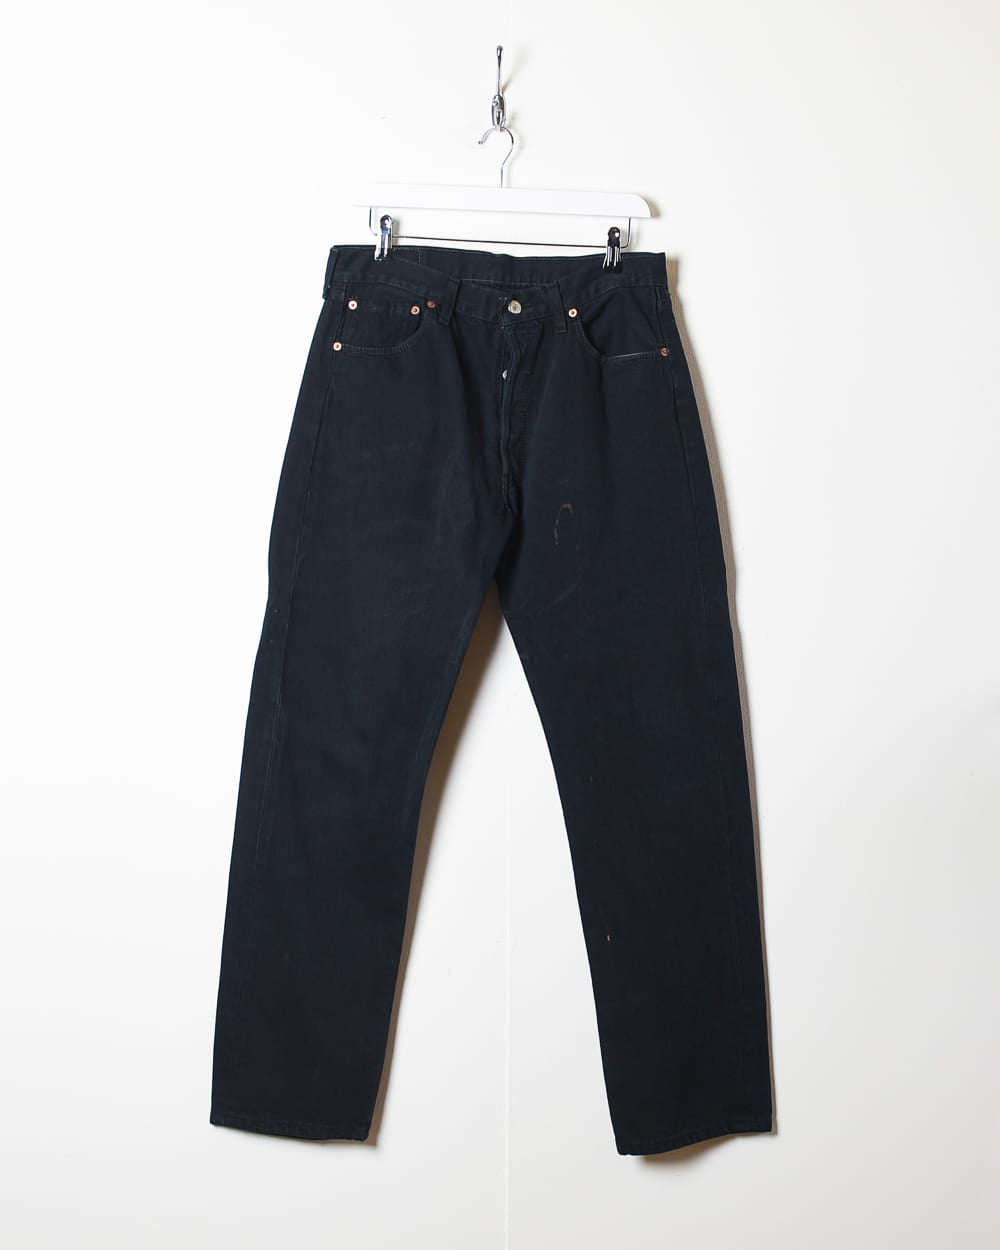 Black Levi's 501 Jeans - W32 L32